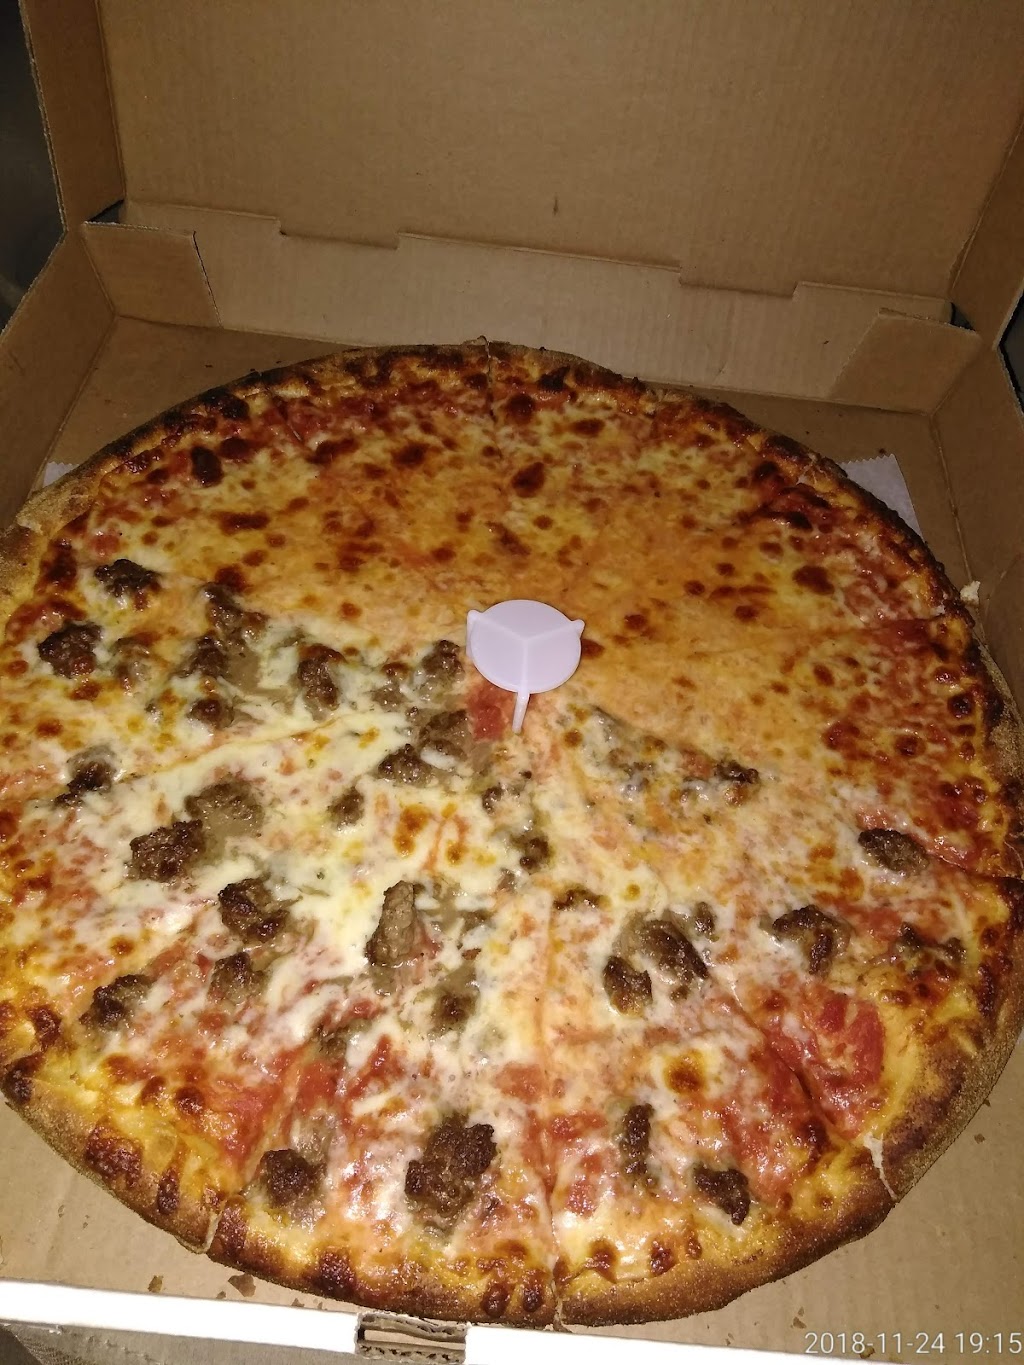 Golden Pizza | 1350 Allen St, Springfield, MA 01118 | Phone: (413) 783-1109